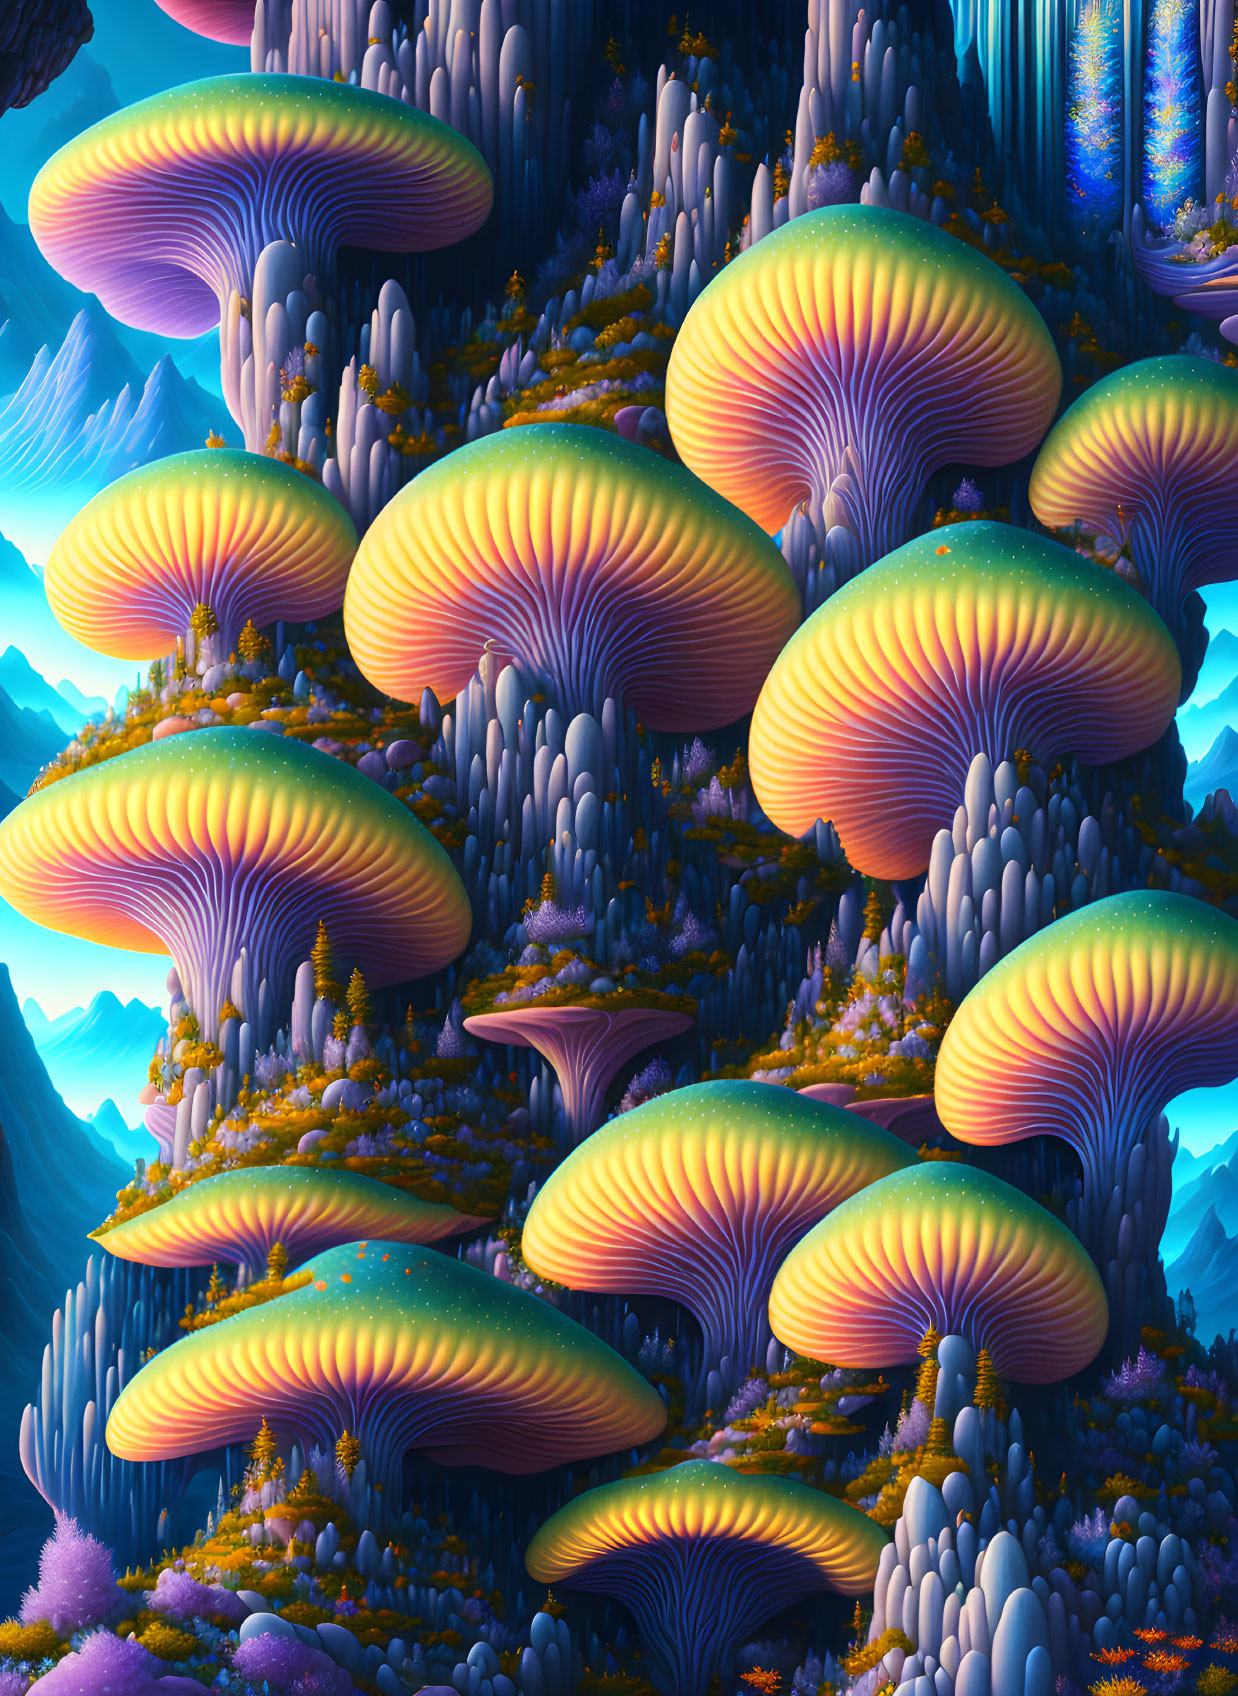 Fungi Climb